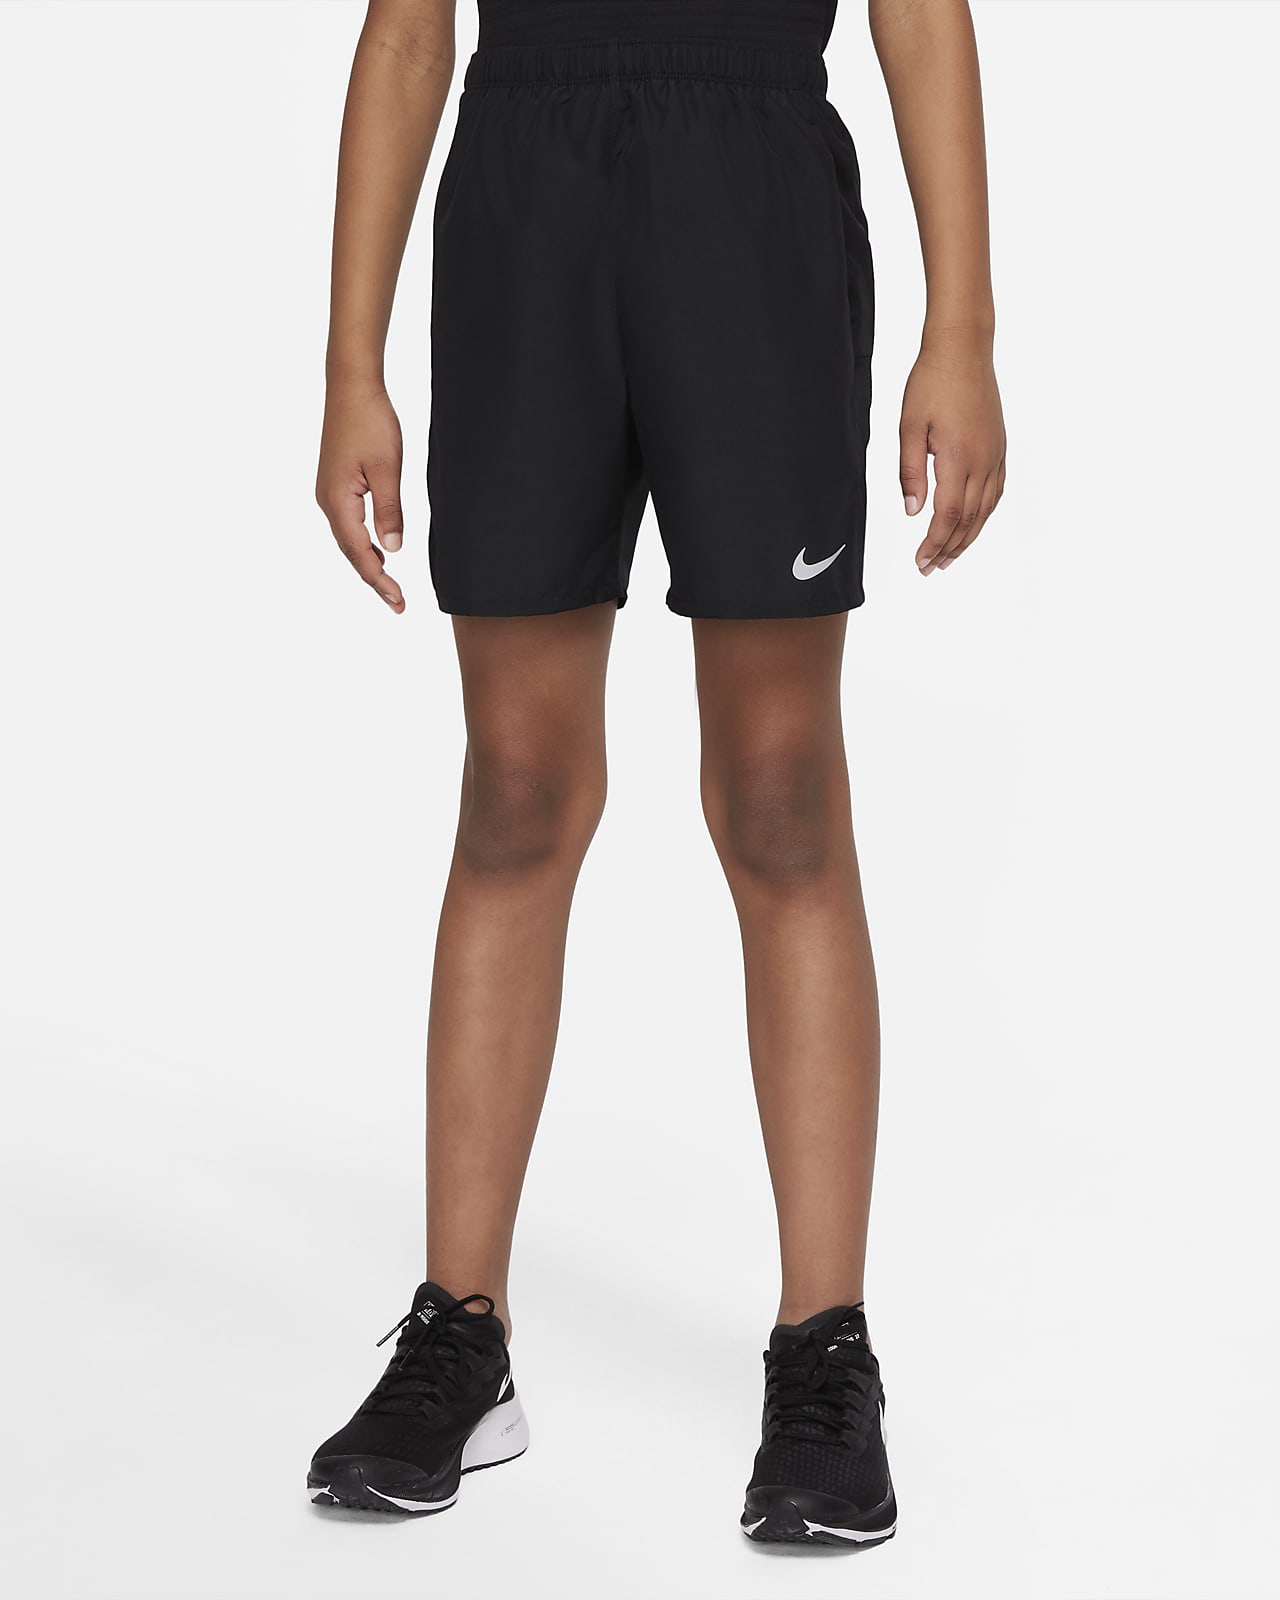 Impresionante Embotellamiento Repeler Nike Challenger Pantalons curts d'entrenament - Nen. Nike ES